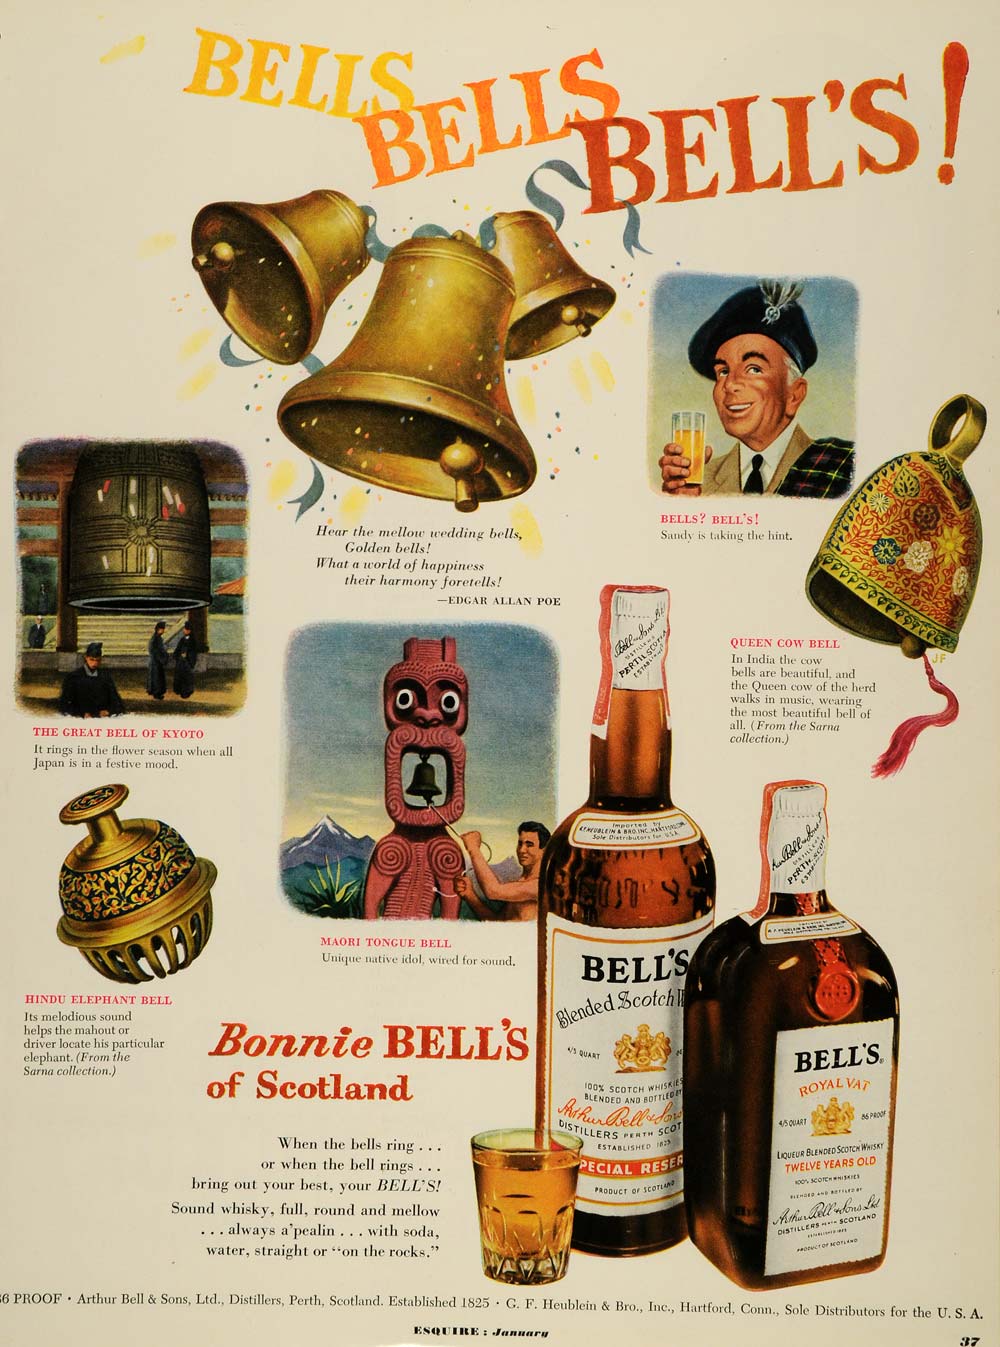 1952 Ad Bonnie Bells Whisky Scotland Maori Tongue Bell - ORIGINAL ESQ4